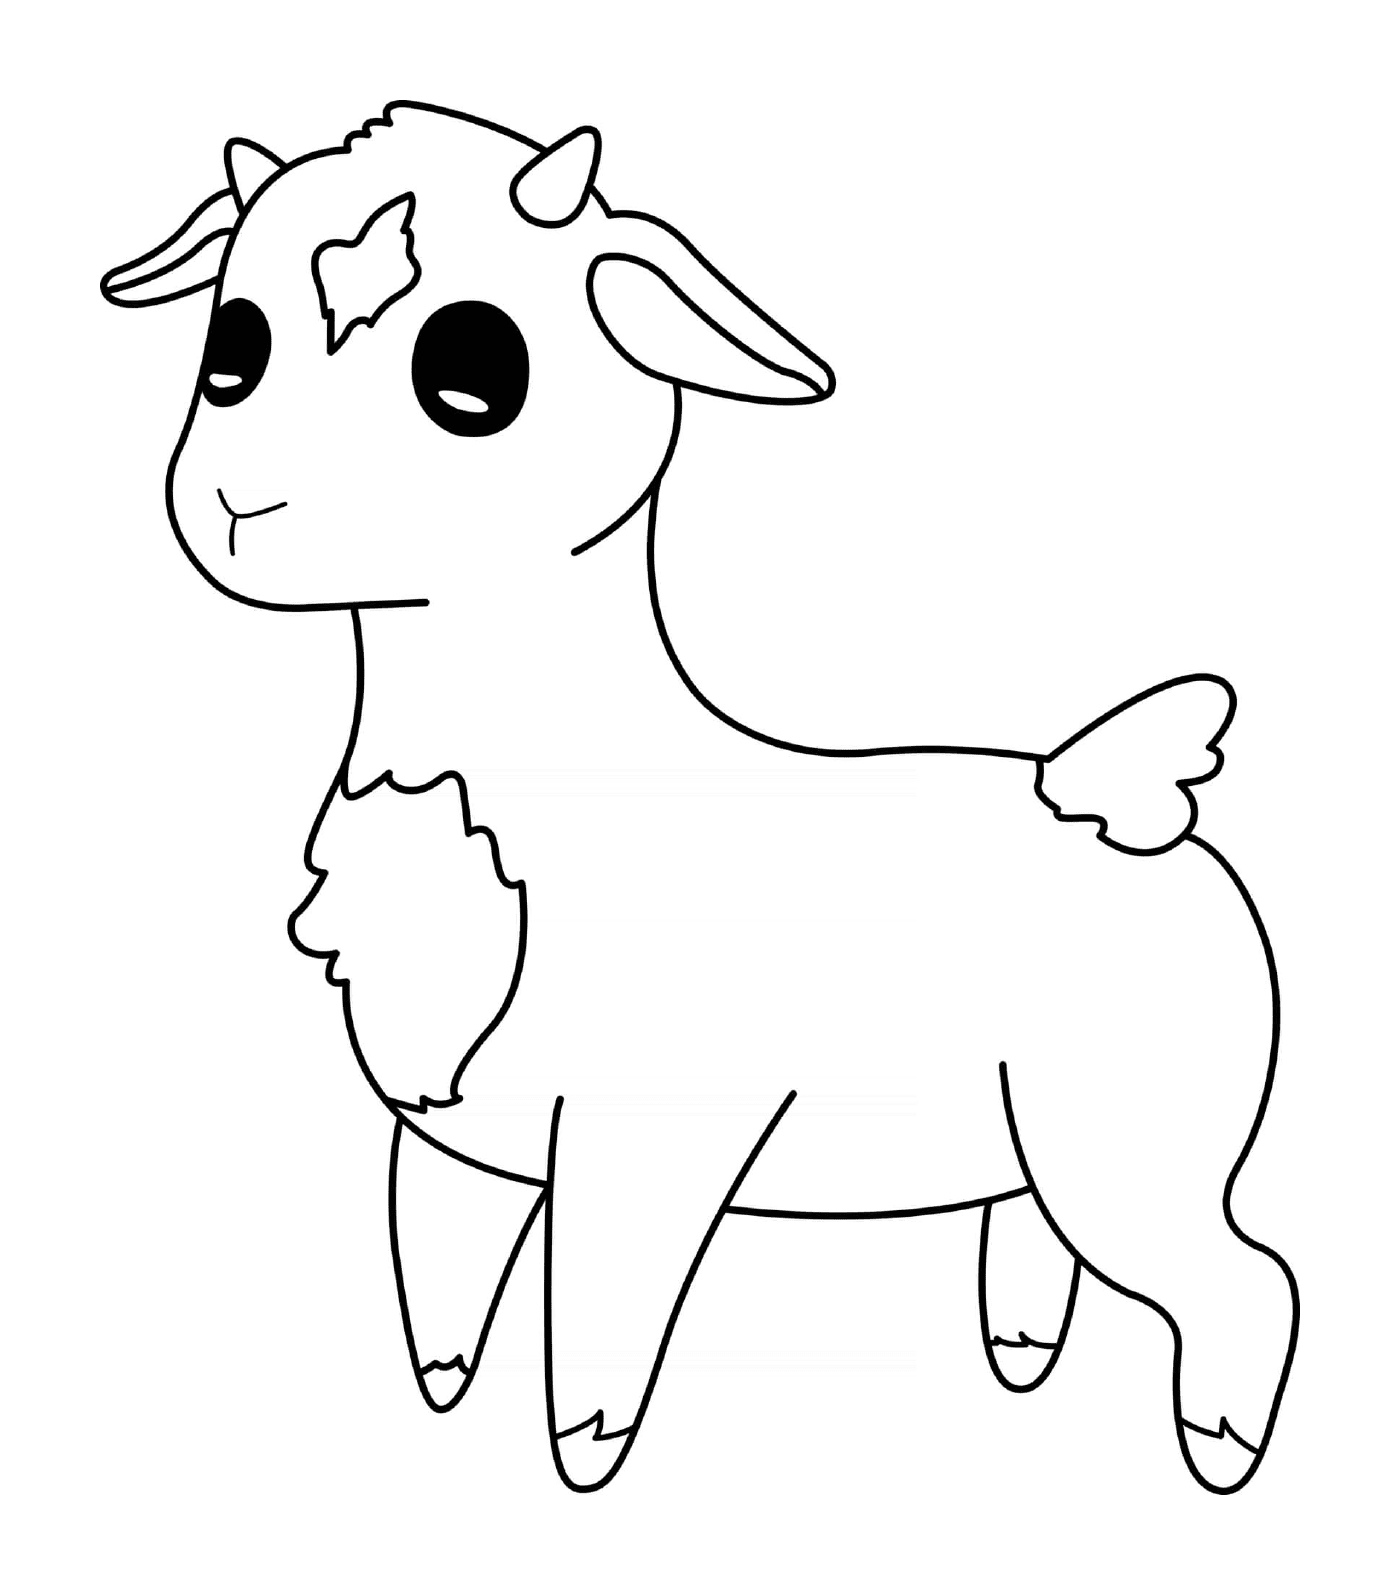  Animal lamb of the farm 